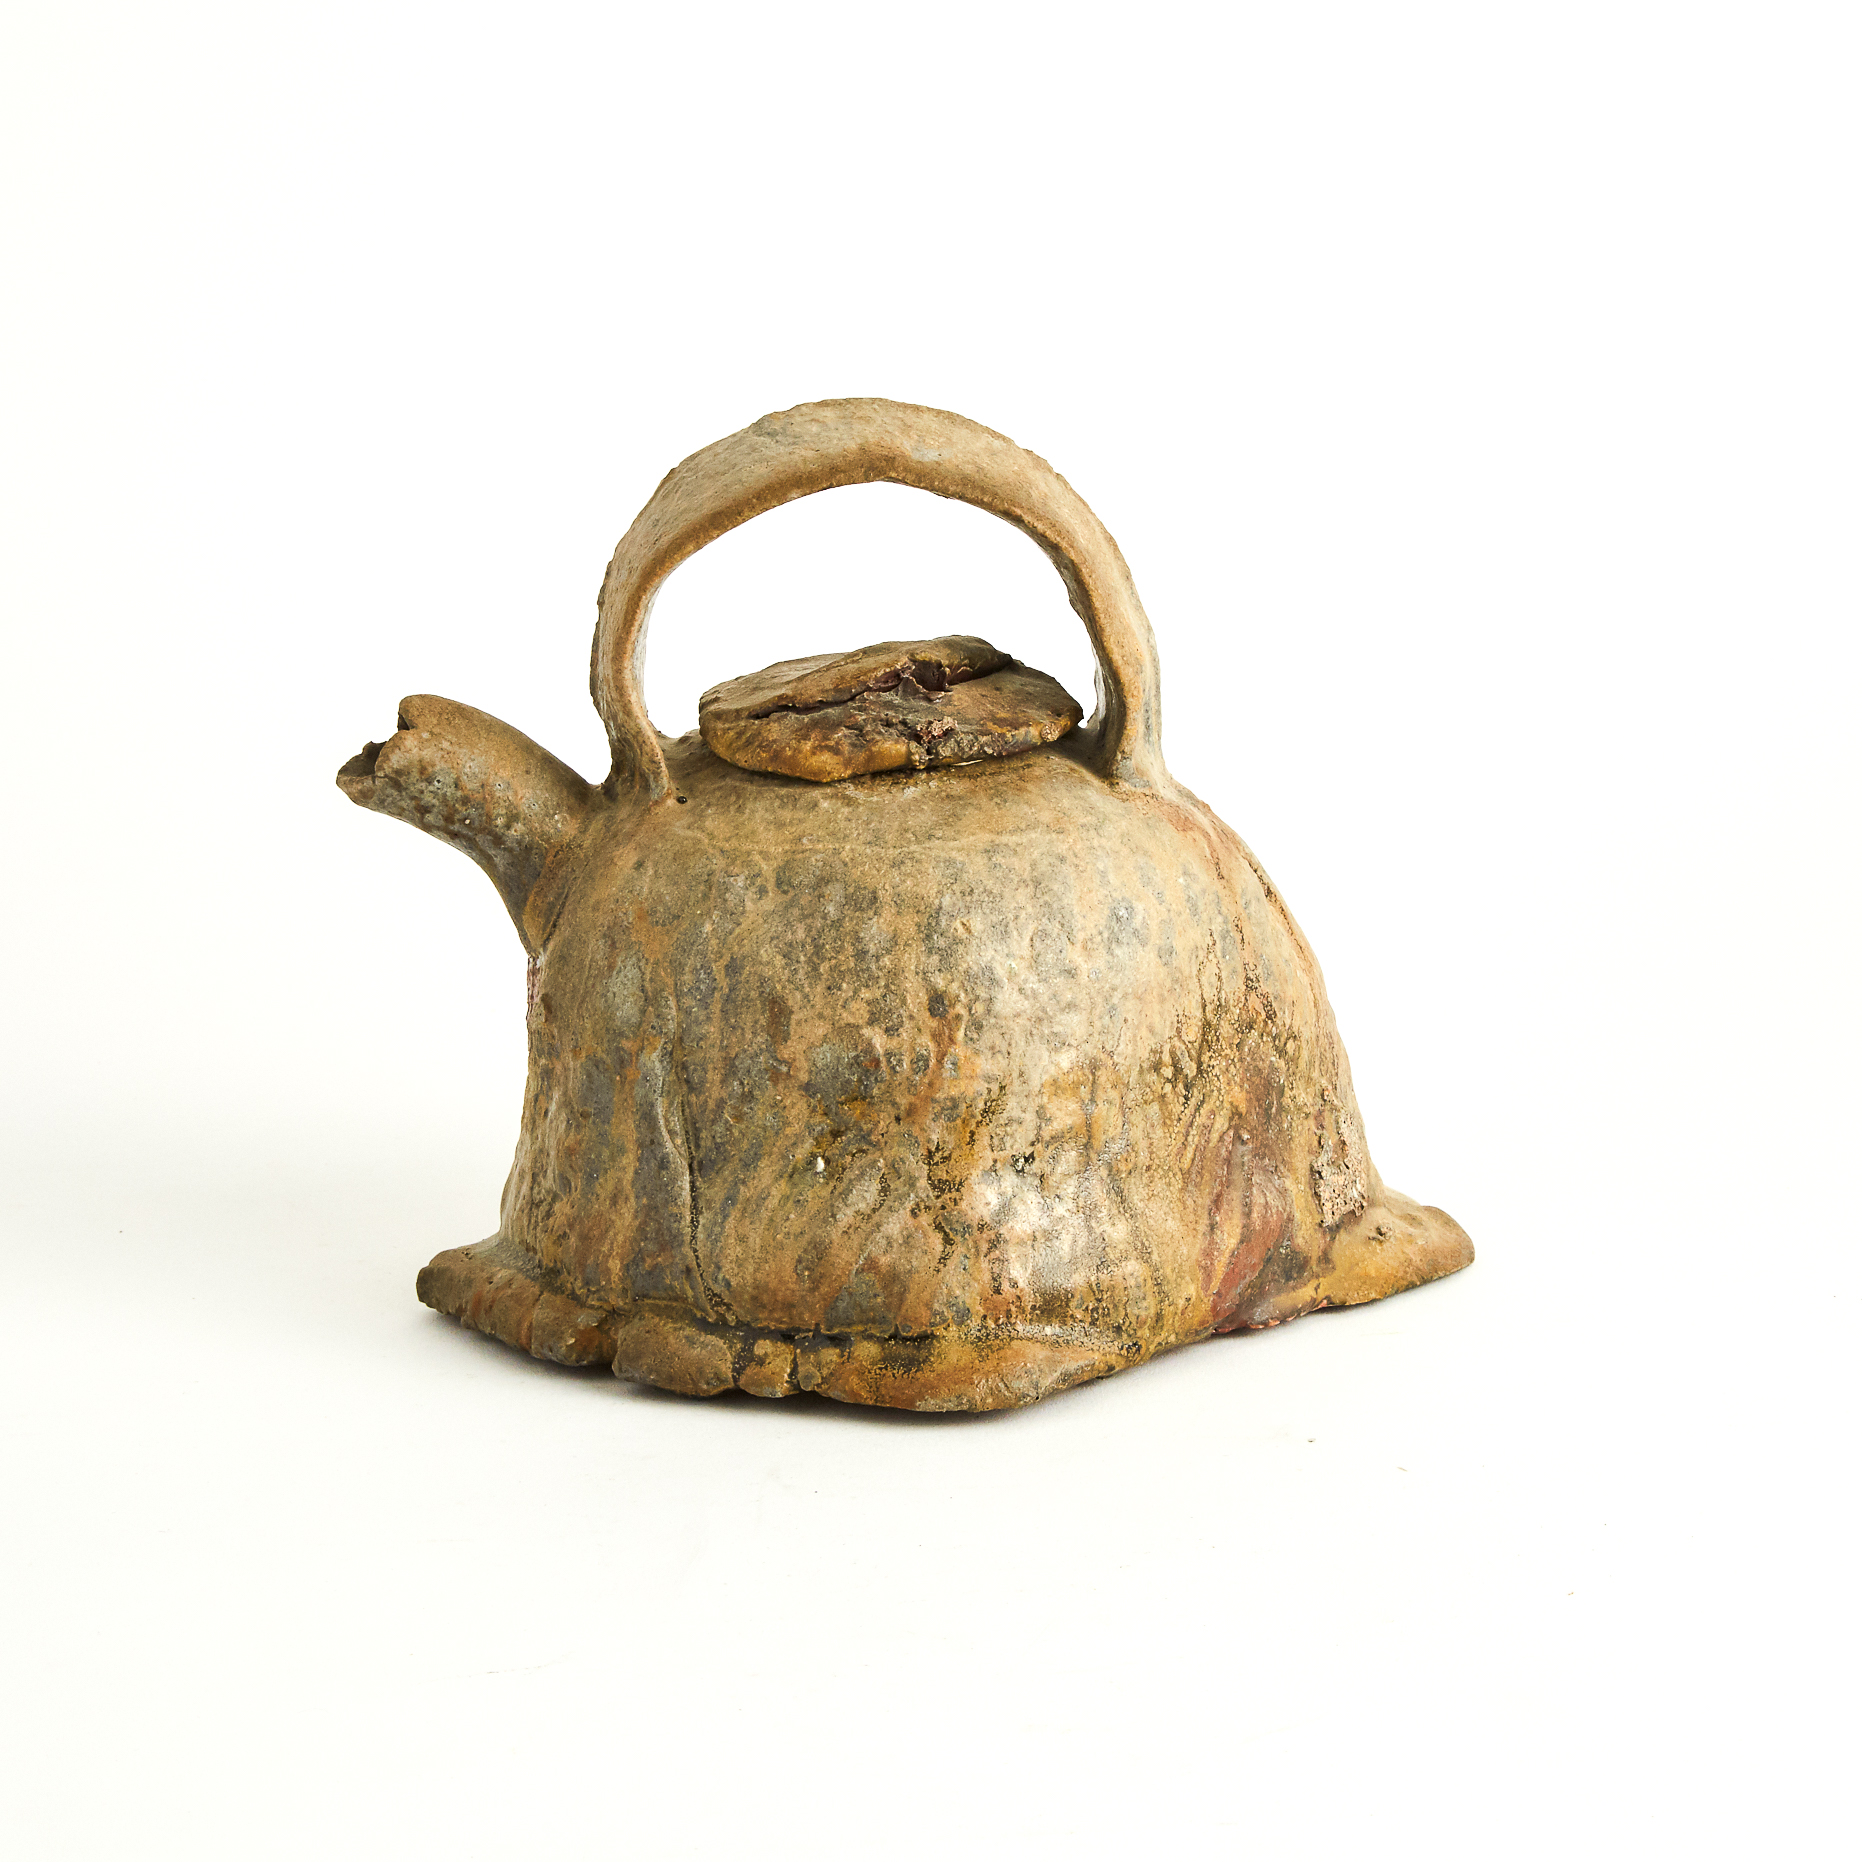 Chuck Hindes (American, b.1942), Stoneware Teapot, c.2000